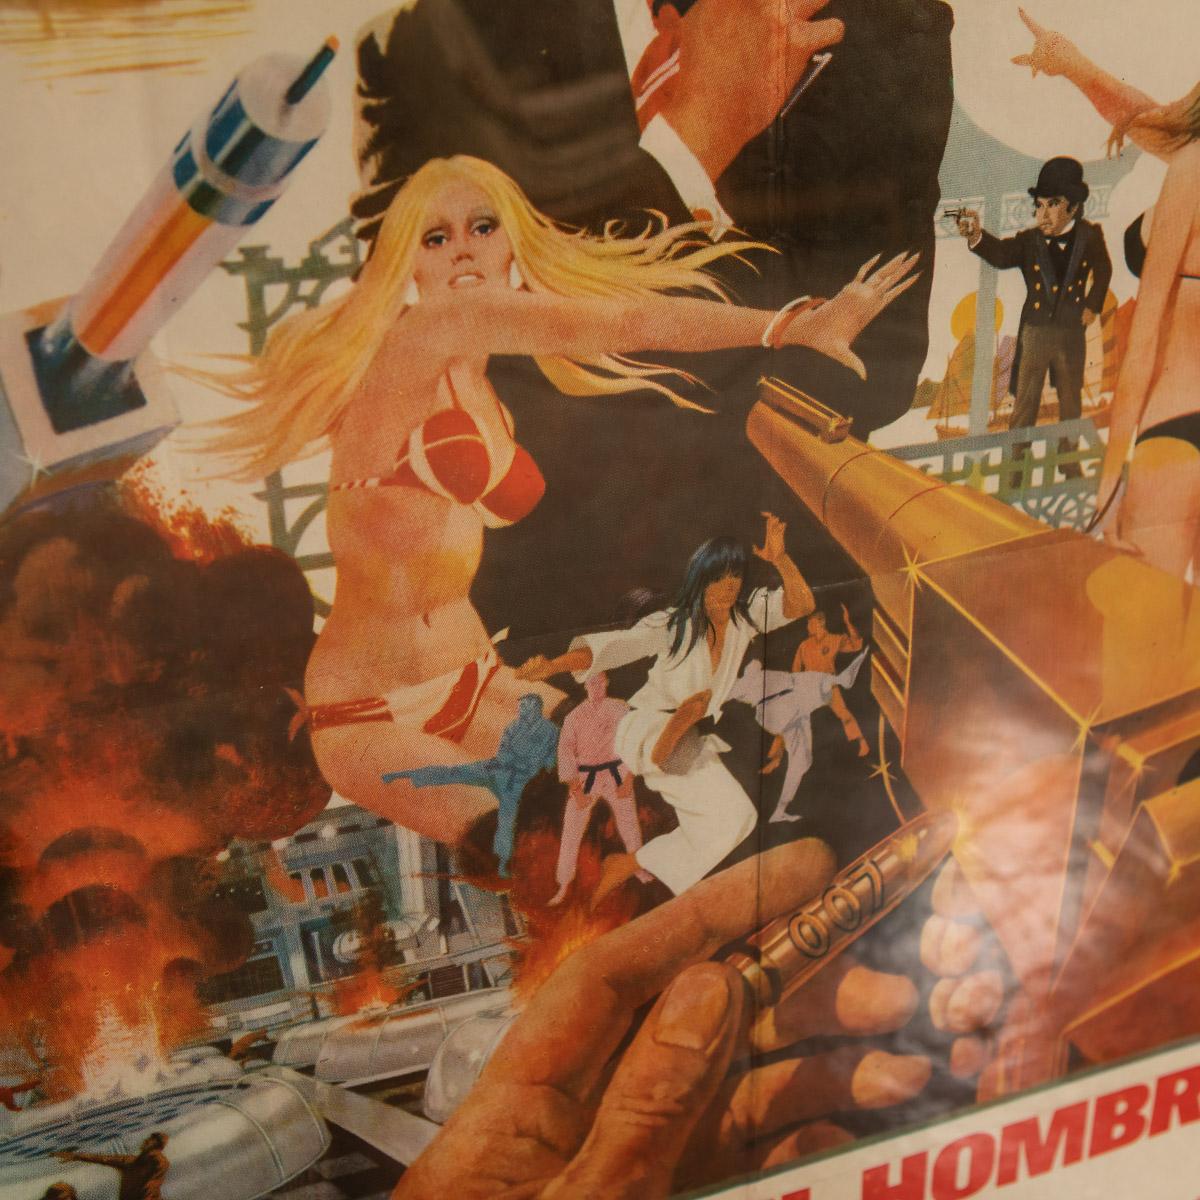 Original Argentinian Release James Bond 'Man with The Golden Gun' Poster, c.1974 5